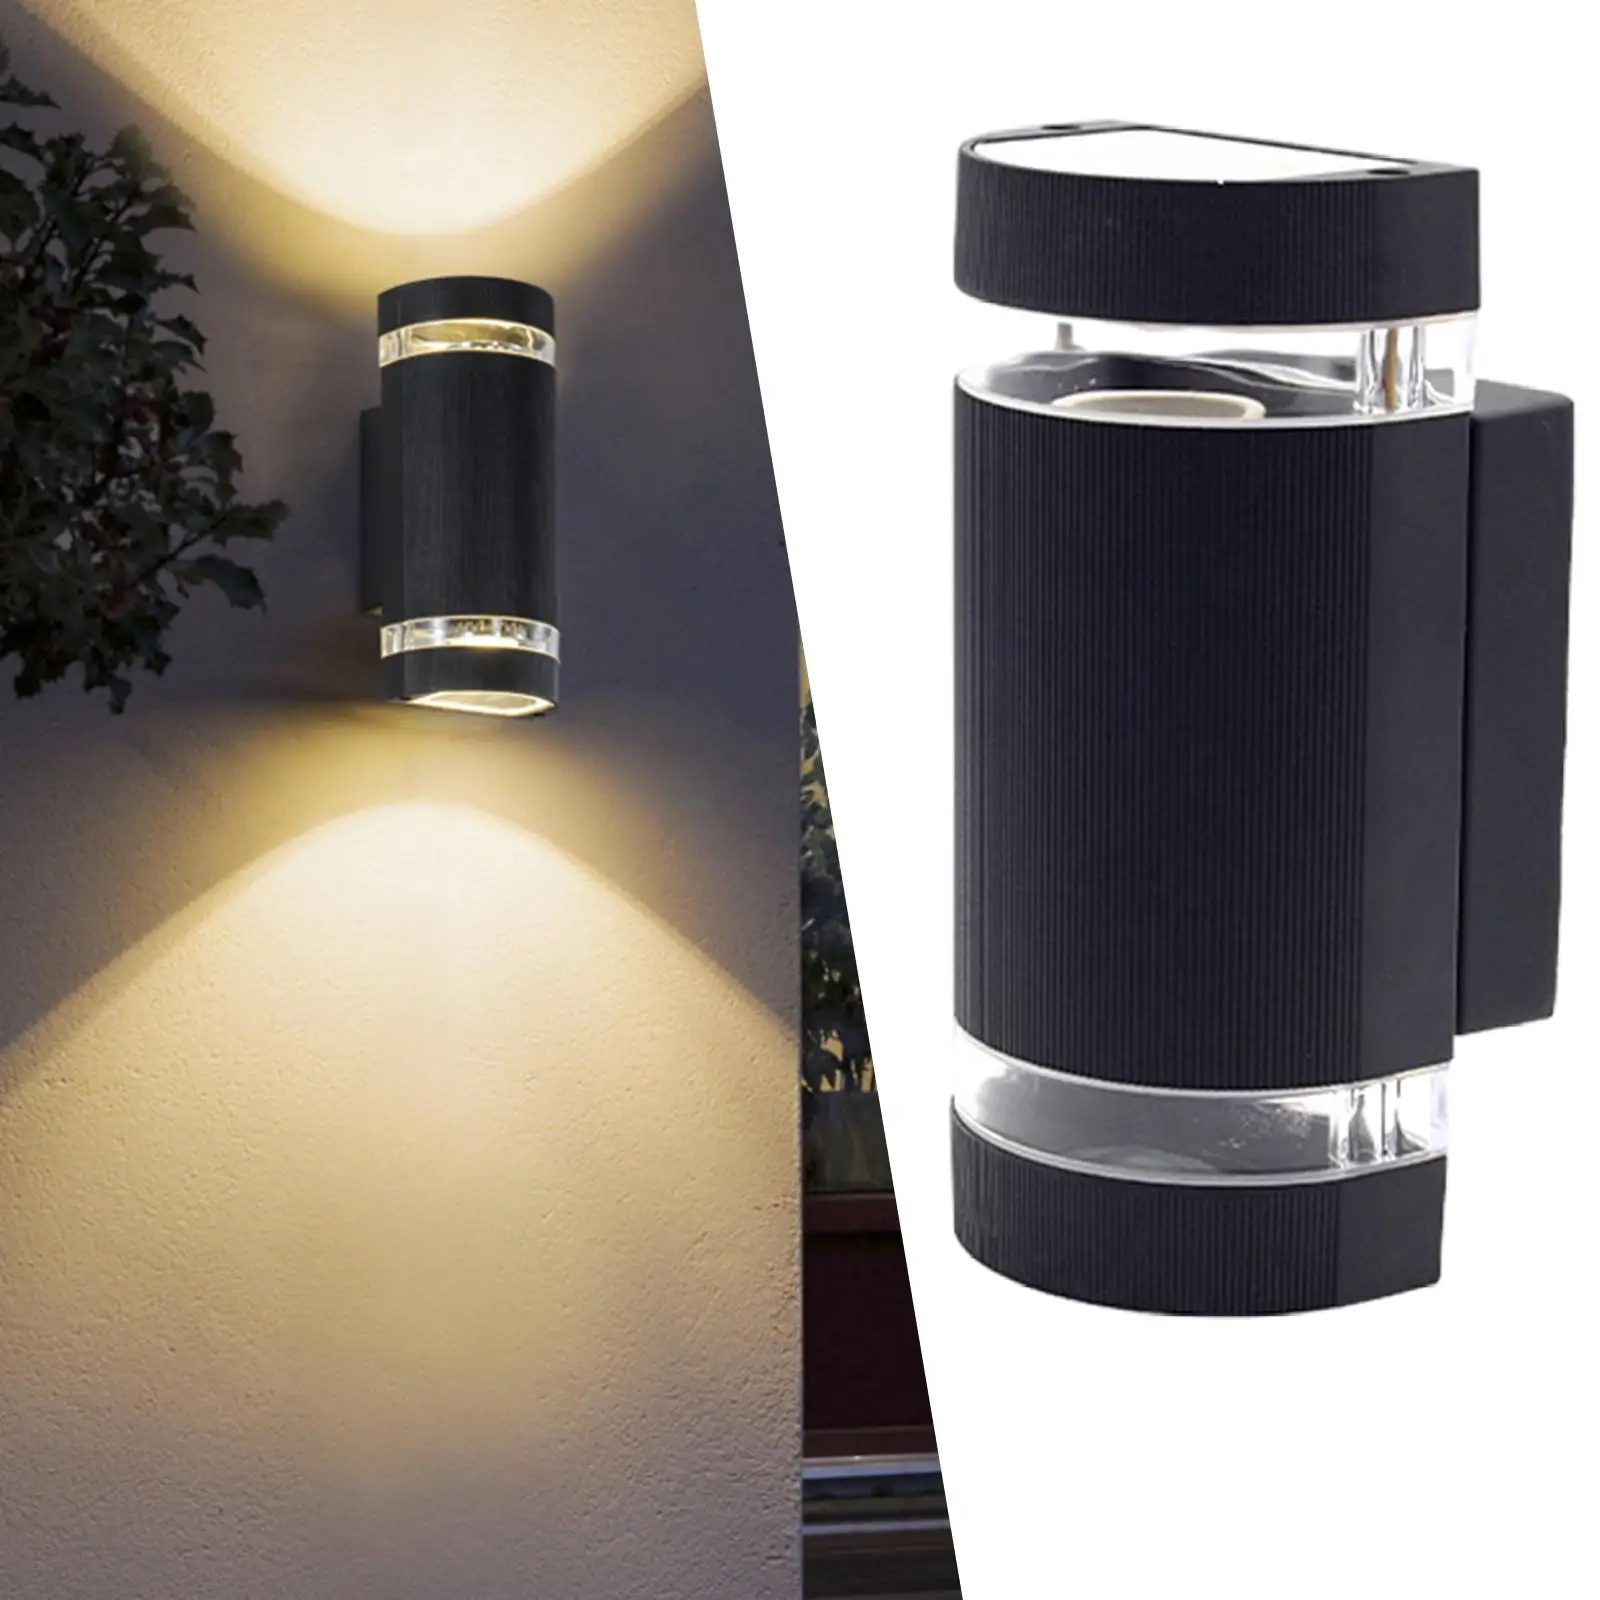 LED Outdoor Up and Down Wall Light Aluminum Decorative Porch Lamp Bathroom Bar Decor Lighting Fixture Sconce Luminaire